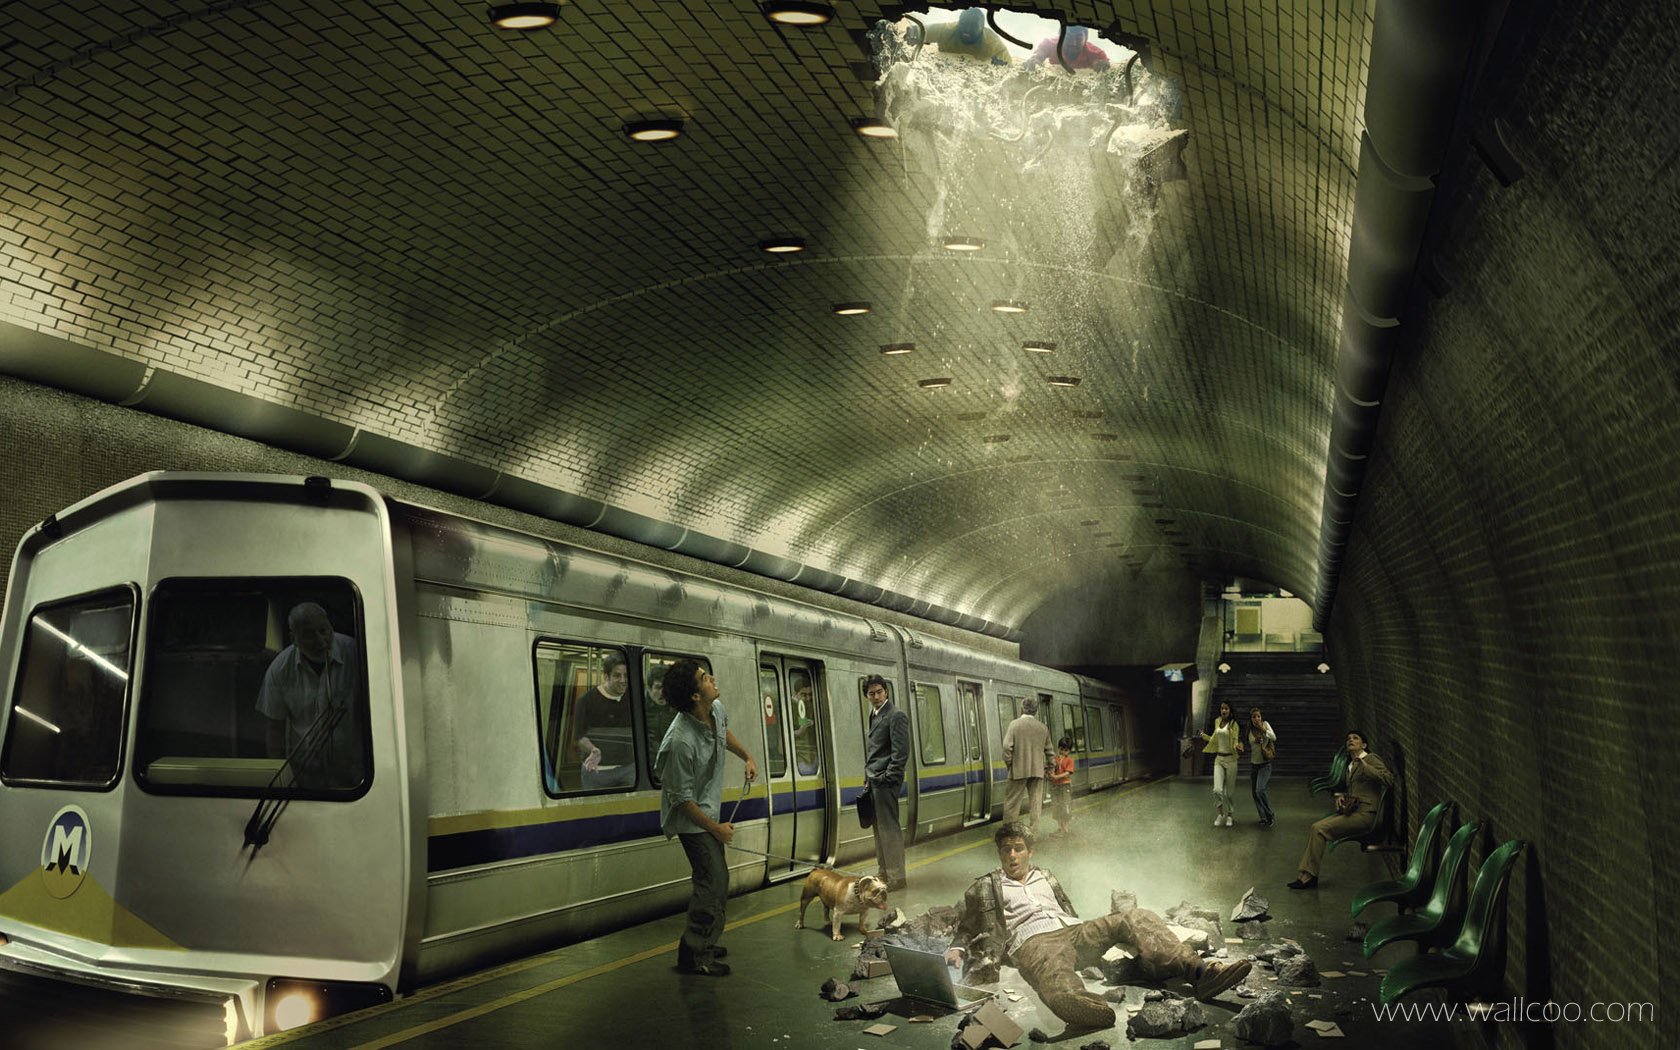 General 1680x1050 photoshopped digital art subway train